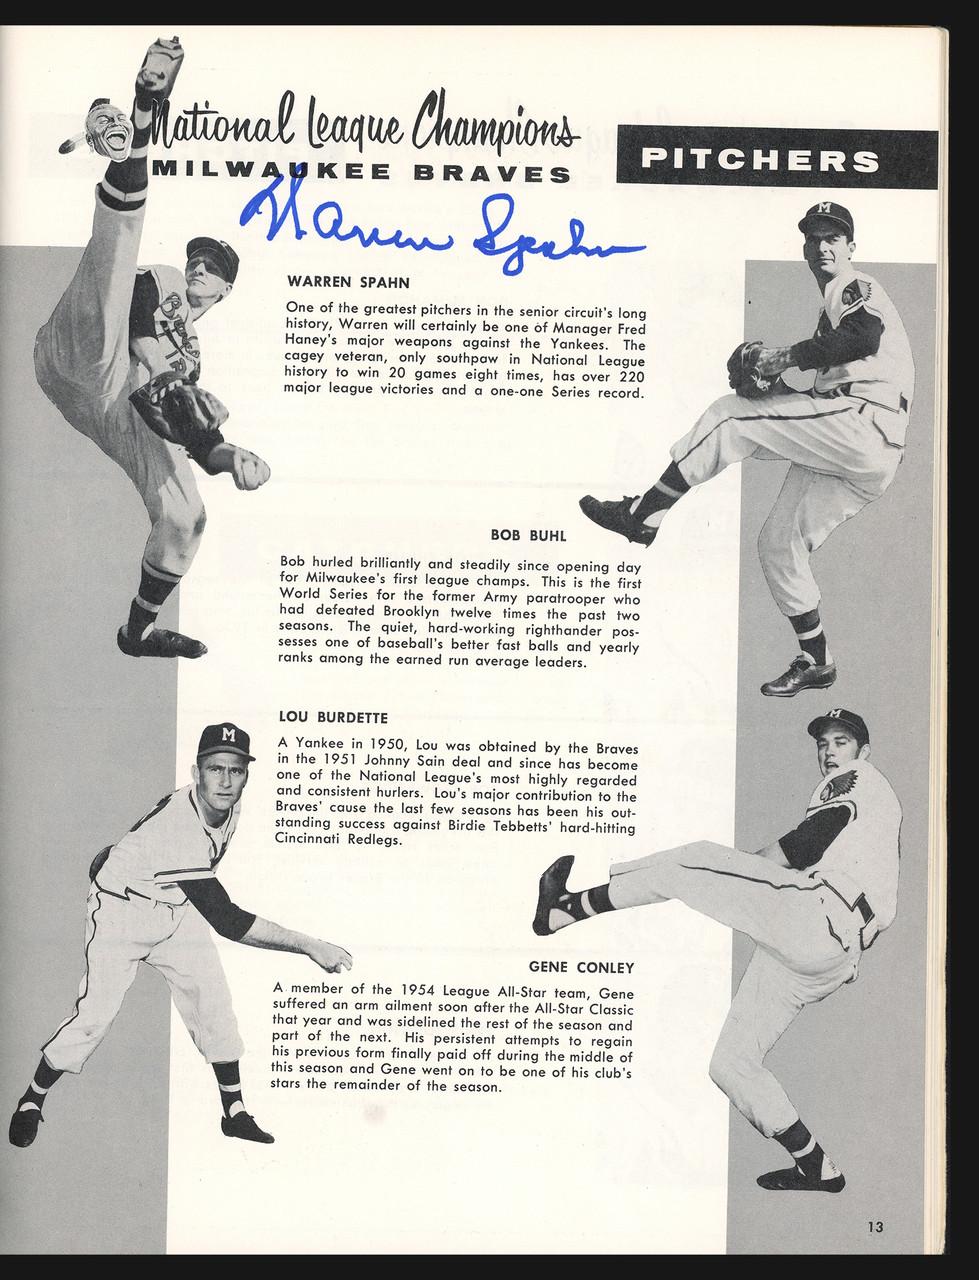 1957 World Series Commemorative Pin - Braves vs. Yankees